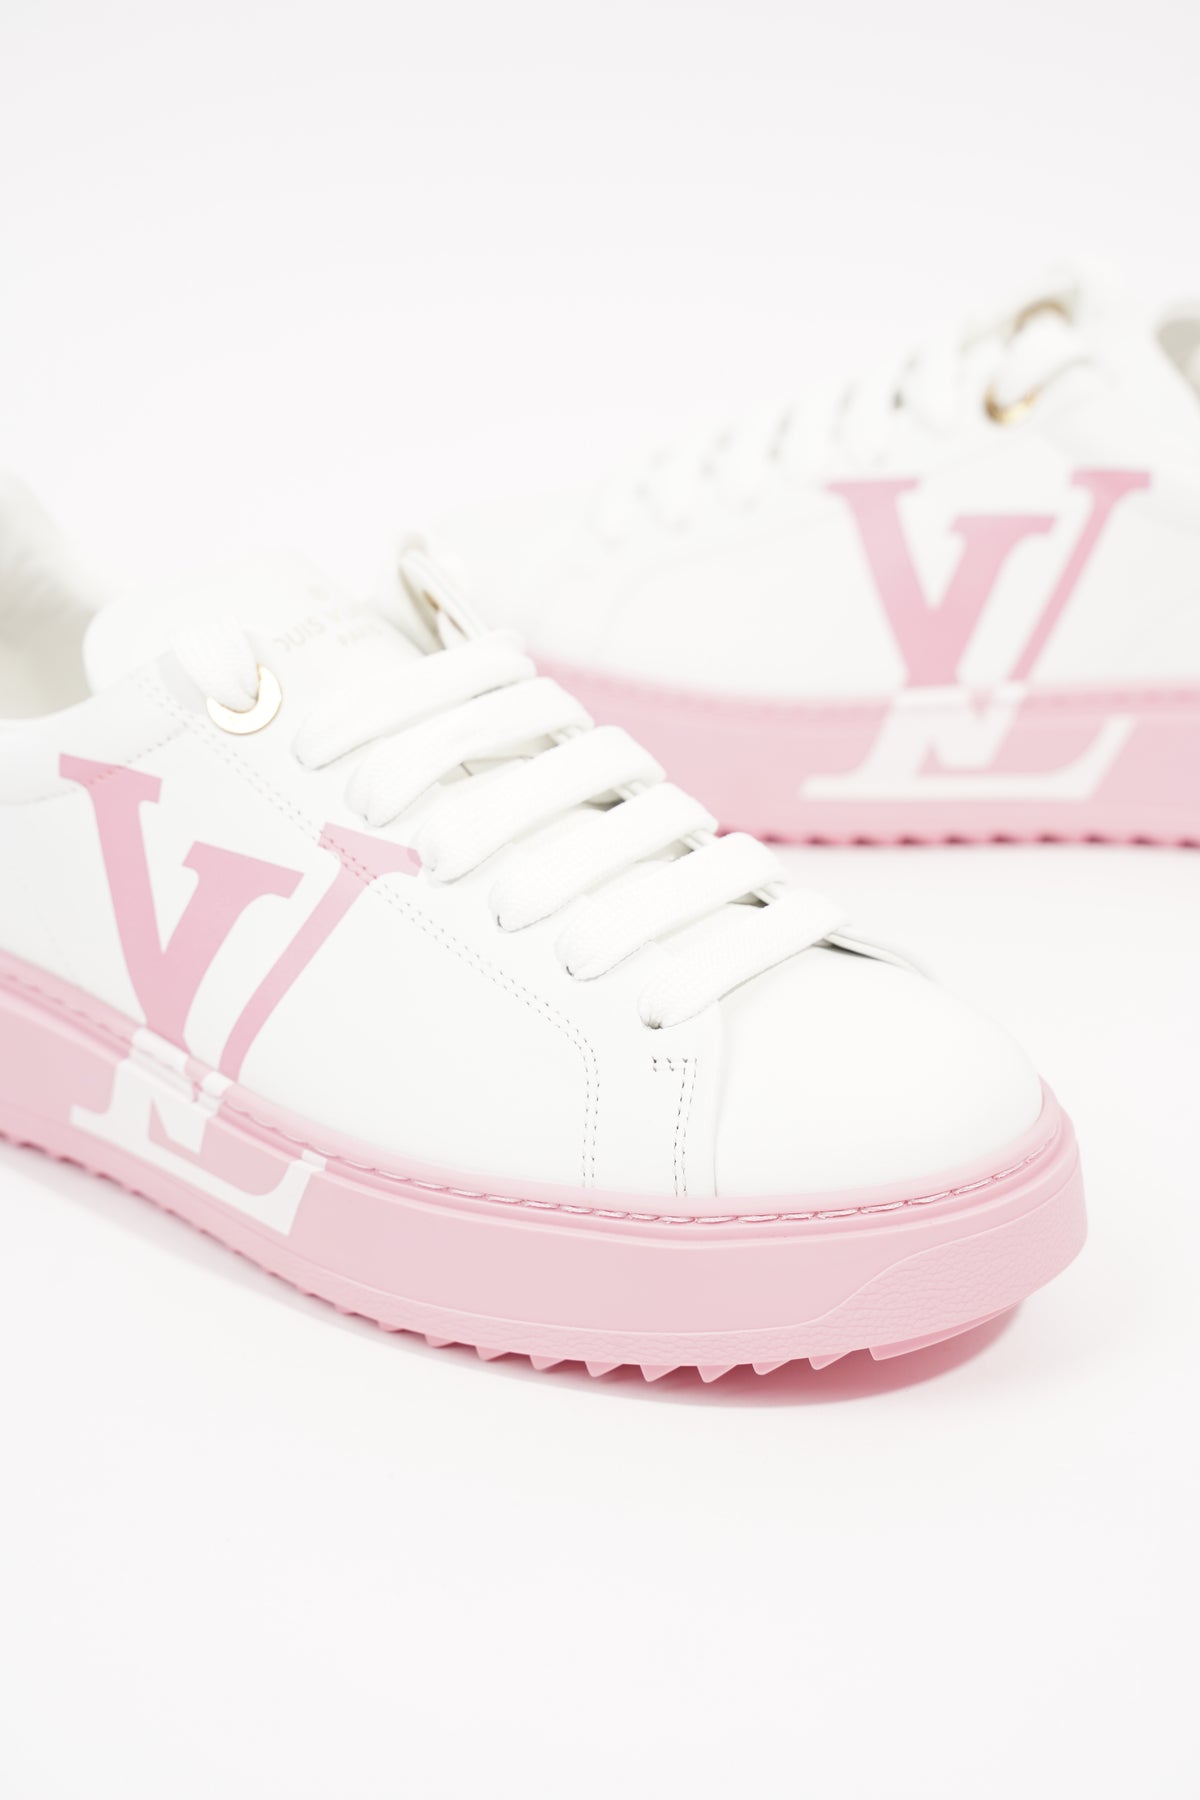 Louis Vuitton Pre-Loved LV sneakers for Women - Pink in UAE